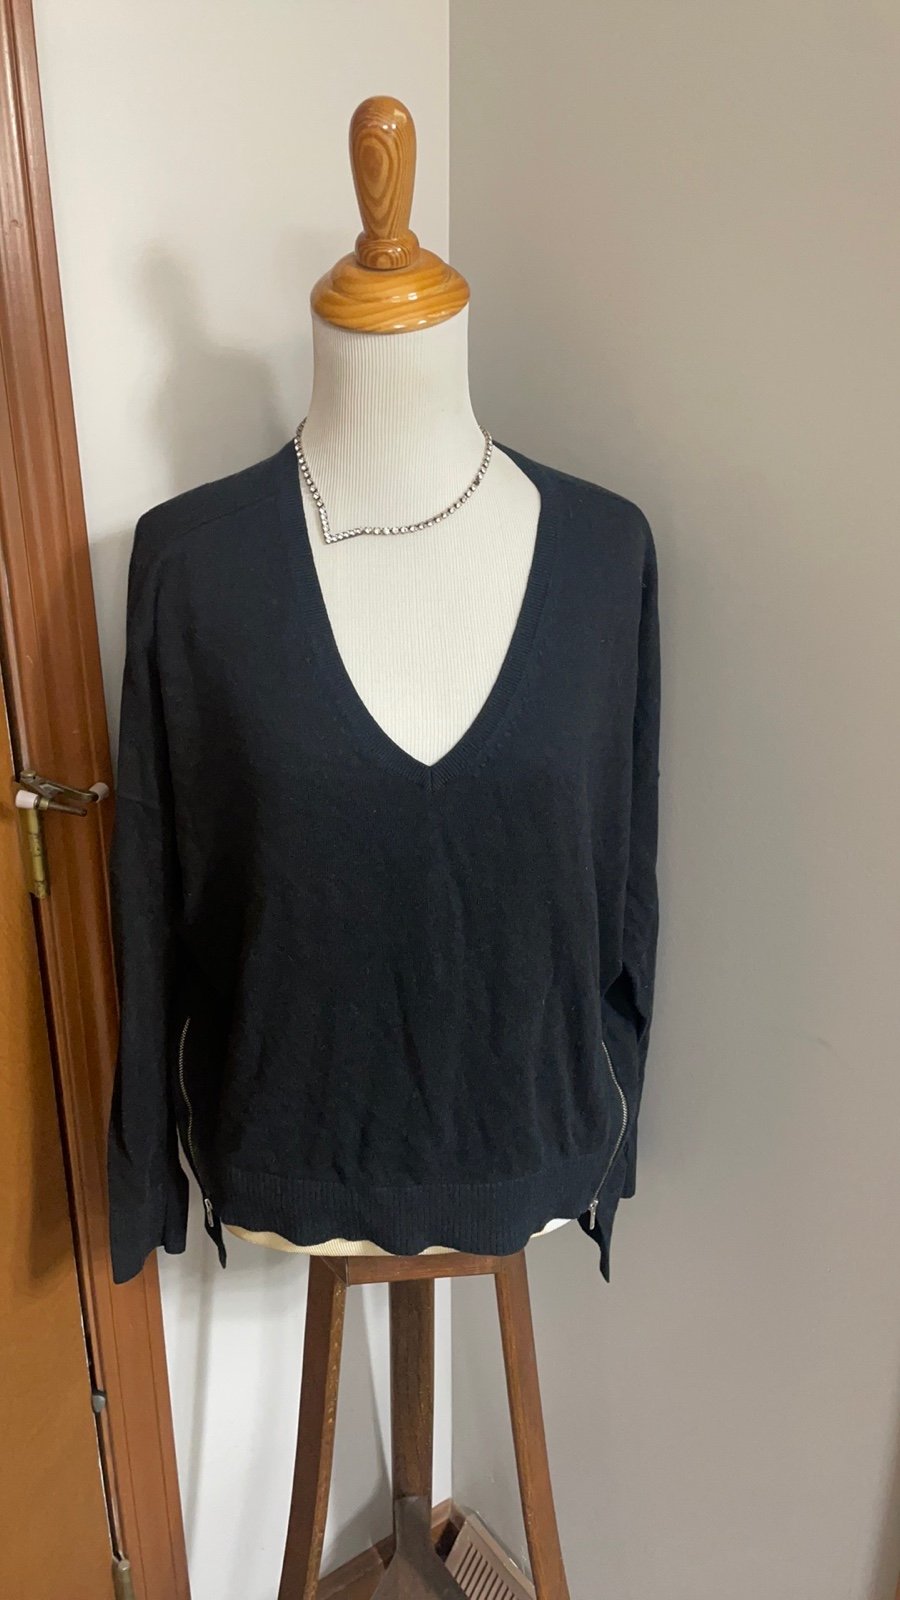 Express v neck black sweater with zip accents dolman sleeve size XS Fb62q4Ljm